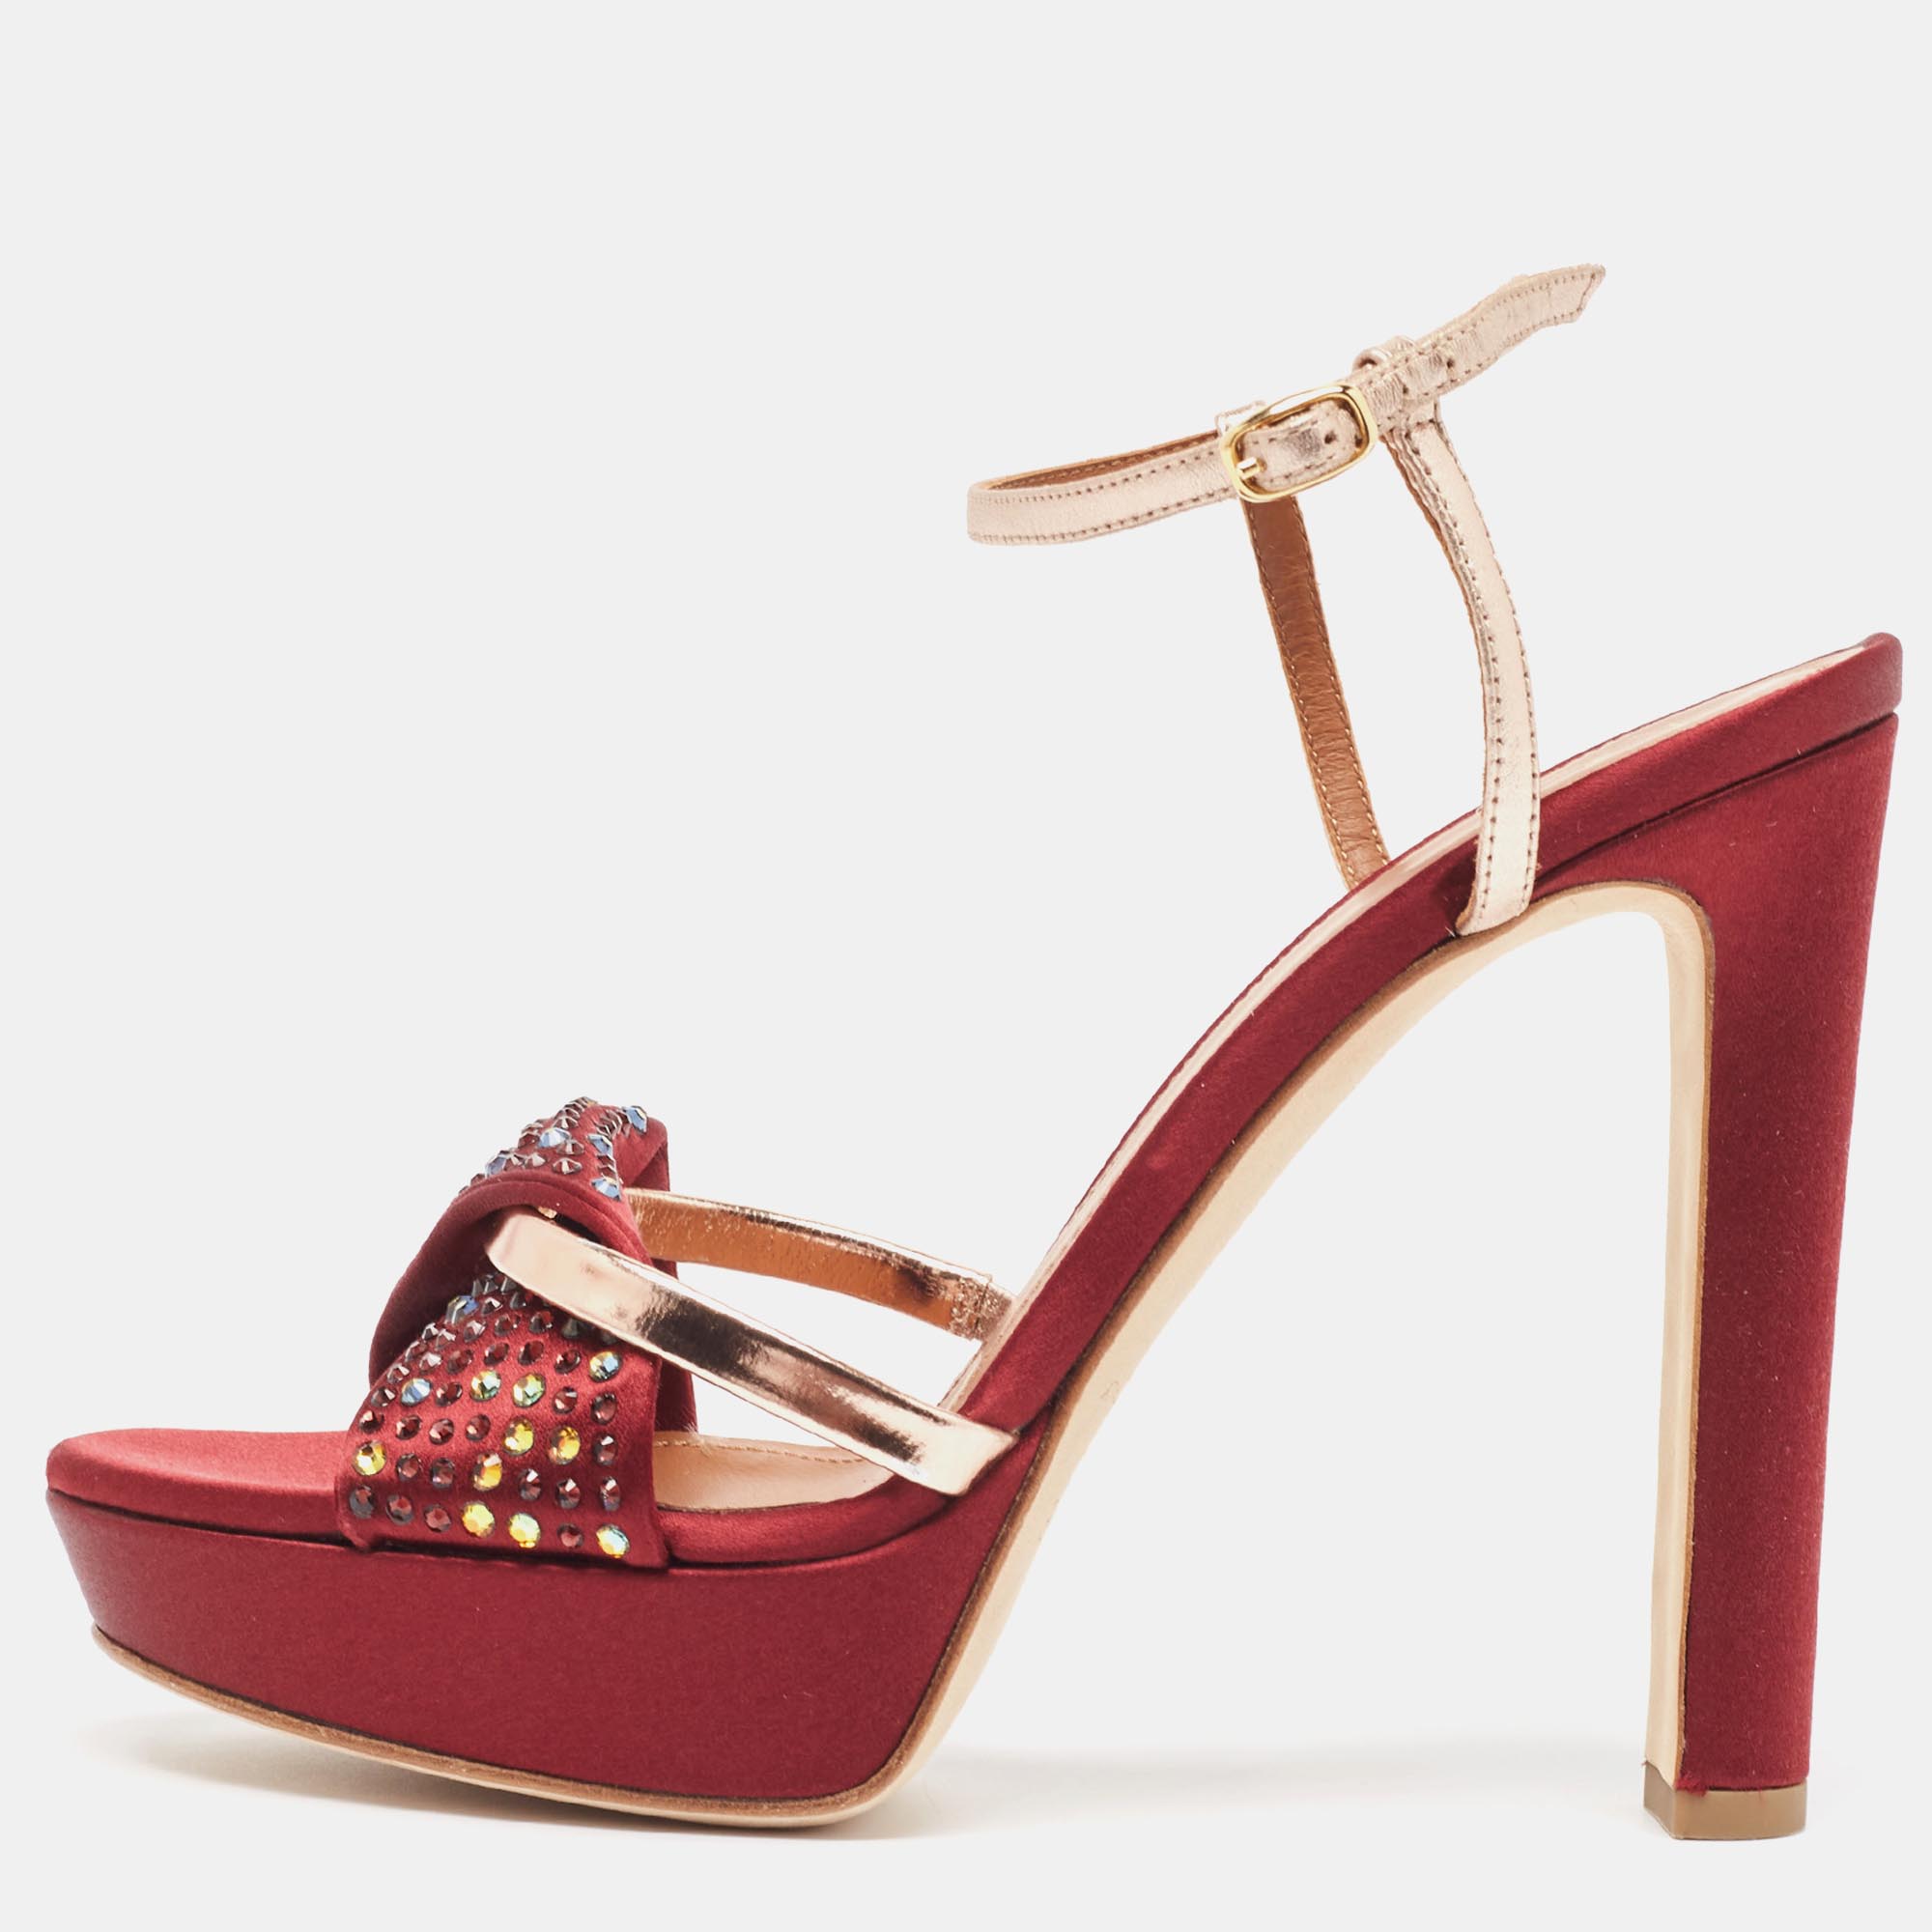 Malone souliers burgundy/gold satin and leather embellished platform sandals size 37.5